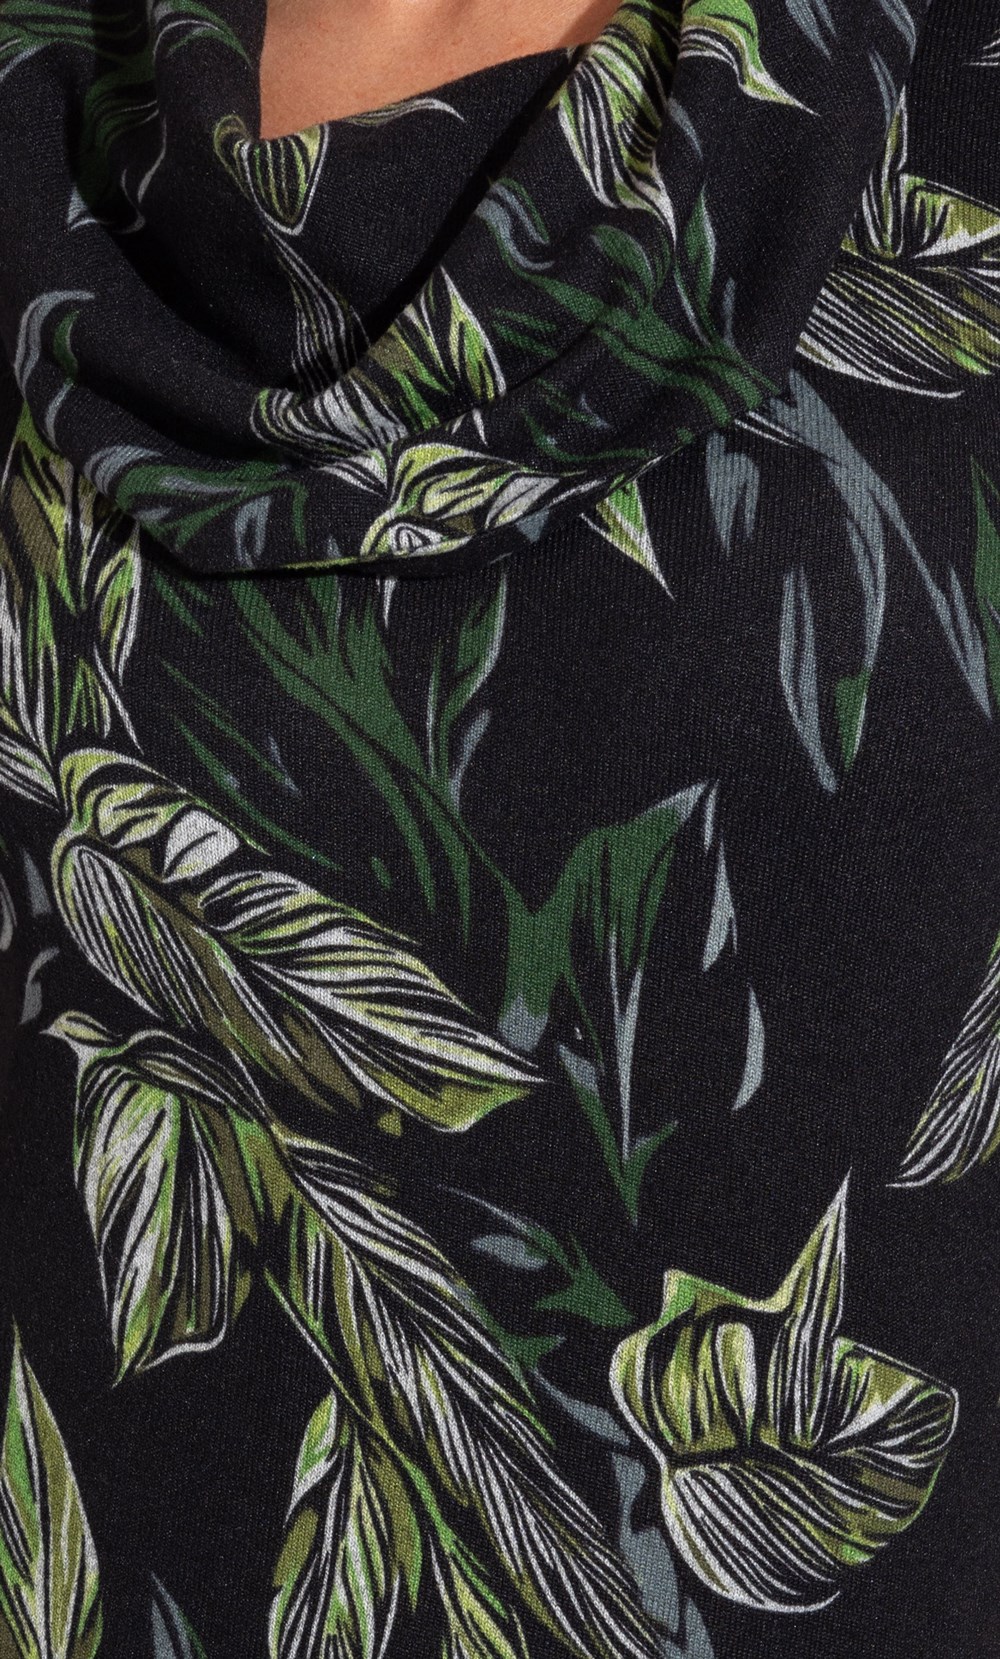 Cowl Neck Leaf Print Brushed Knitted Top in Black | Klass